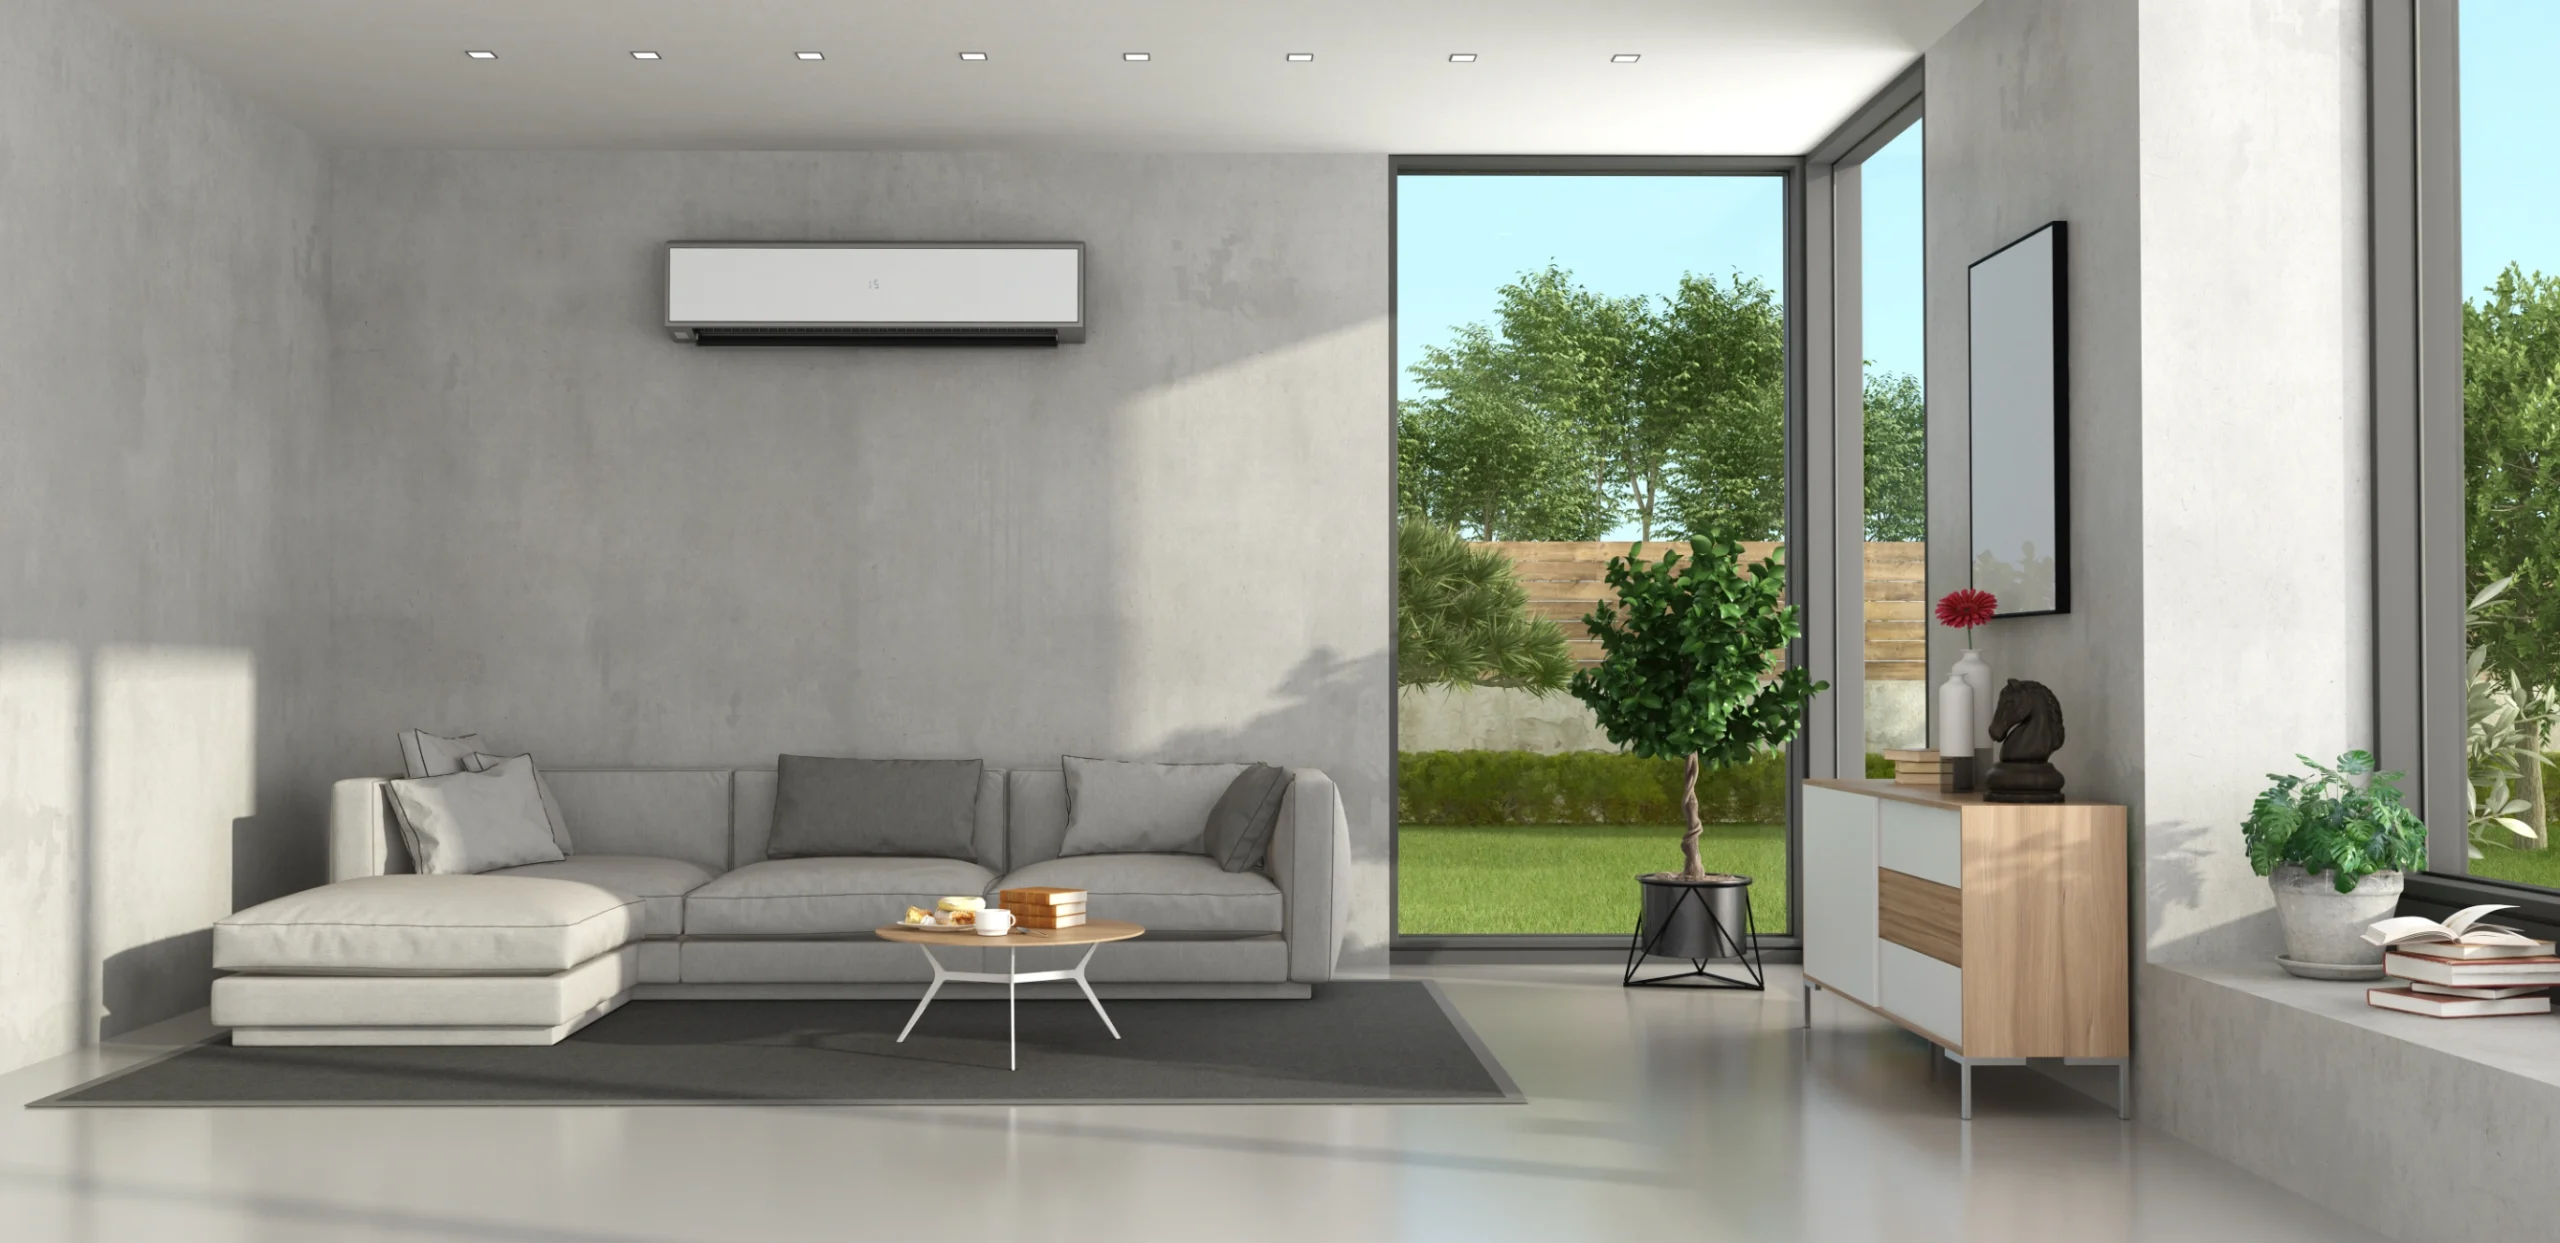 Head-miniimalist-living-room-with-modern-furniture-and-2021-08-27-09-39-06-utc